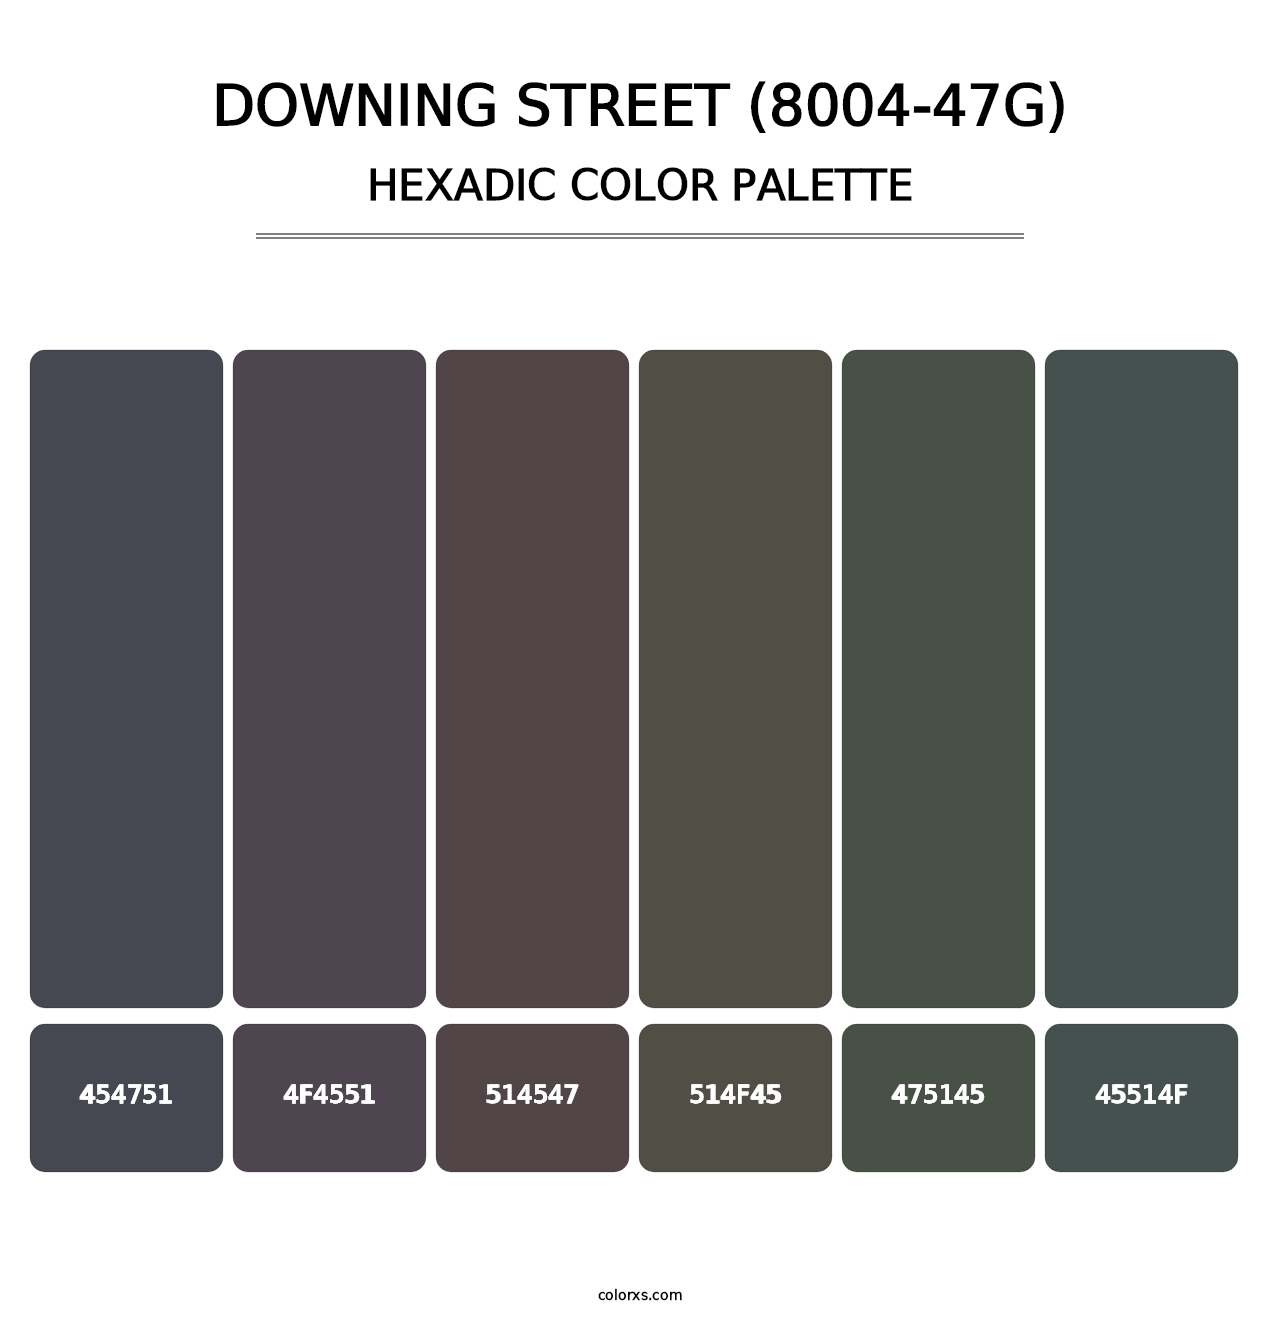 Downing Street (8004-47G) - Hexadic Color Palette